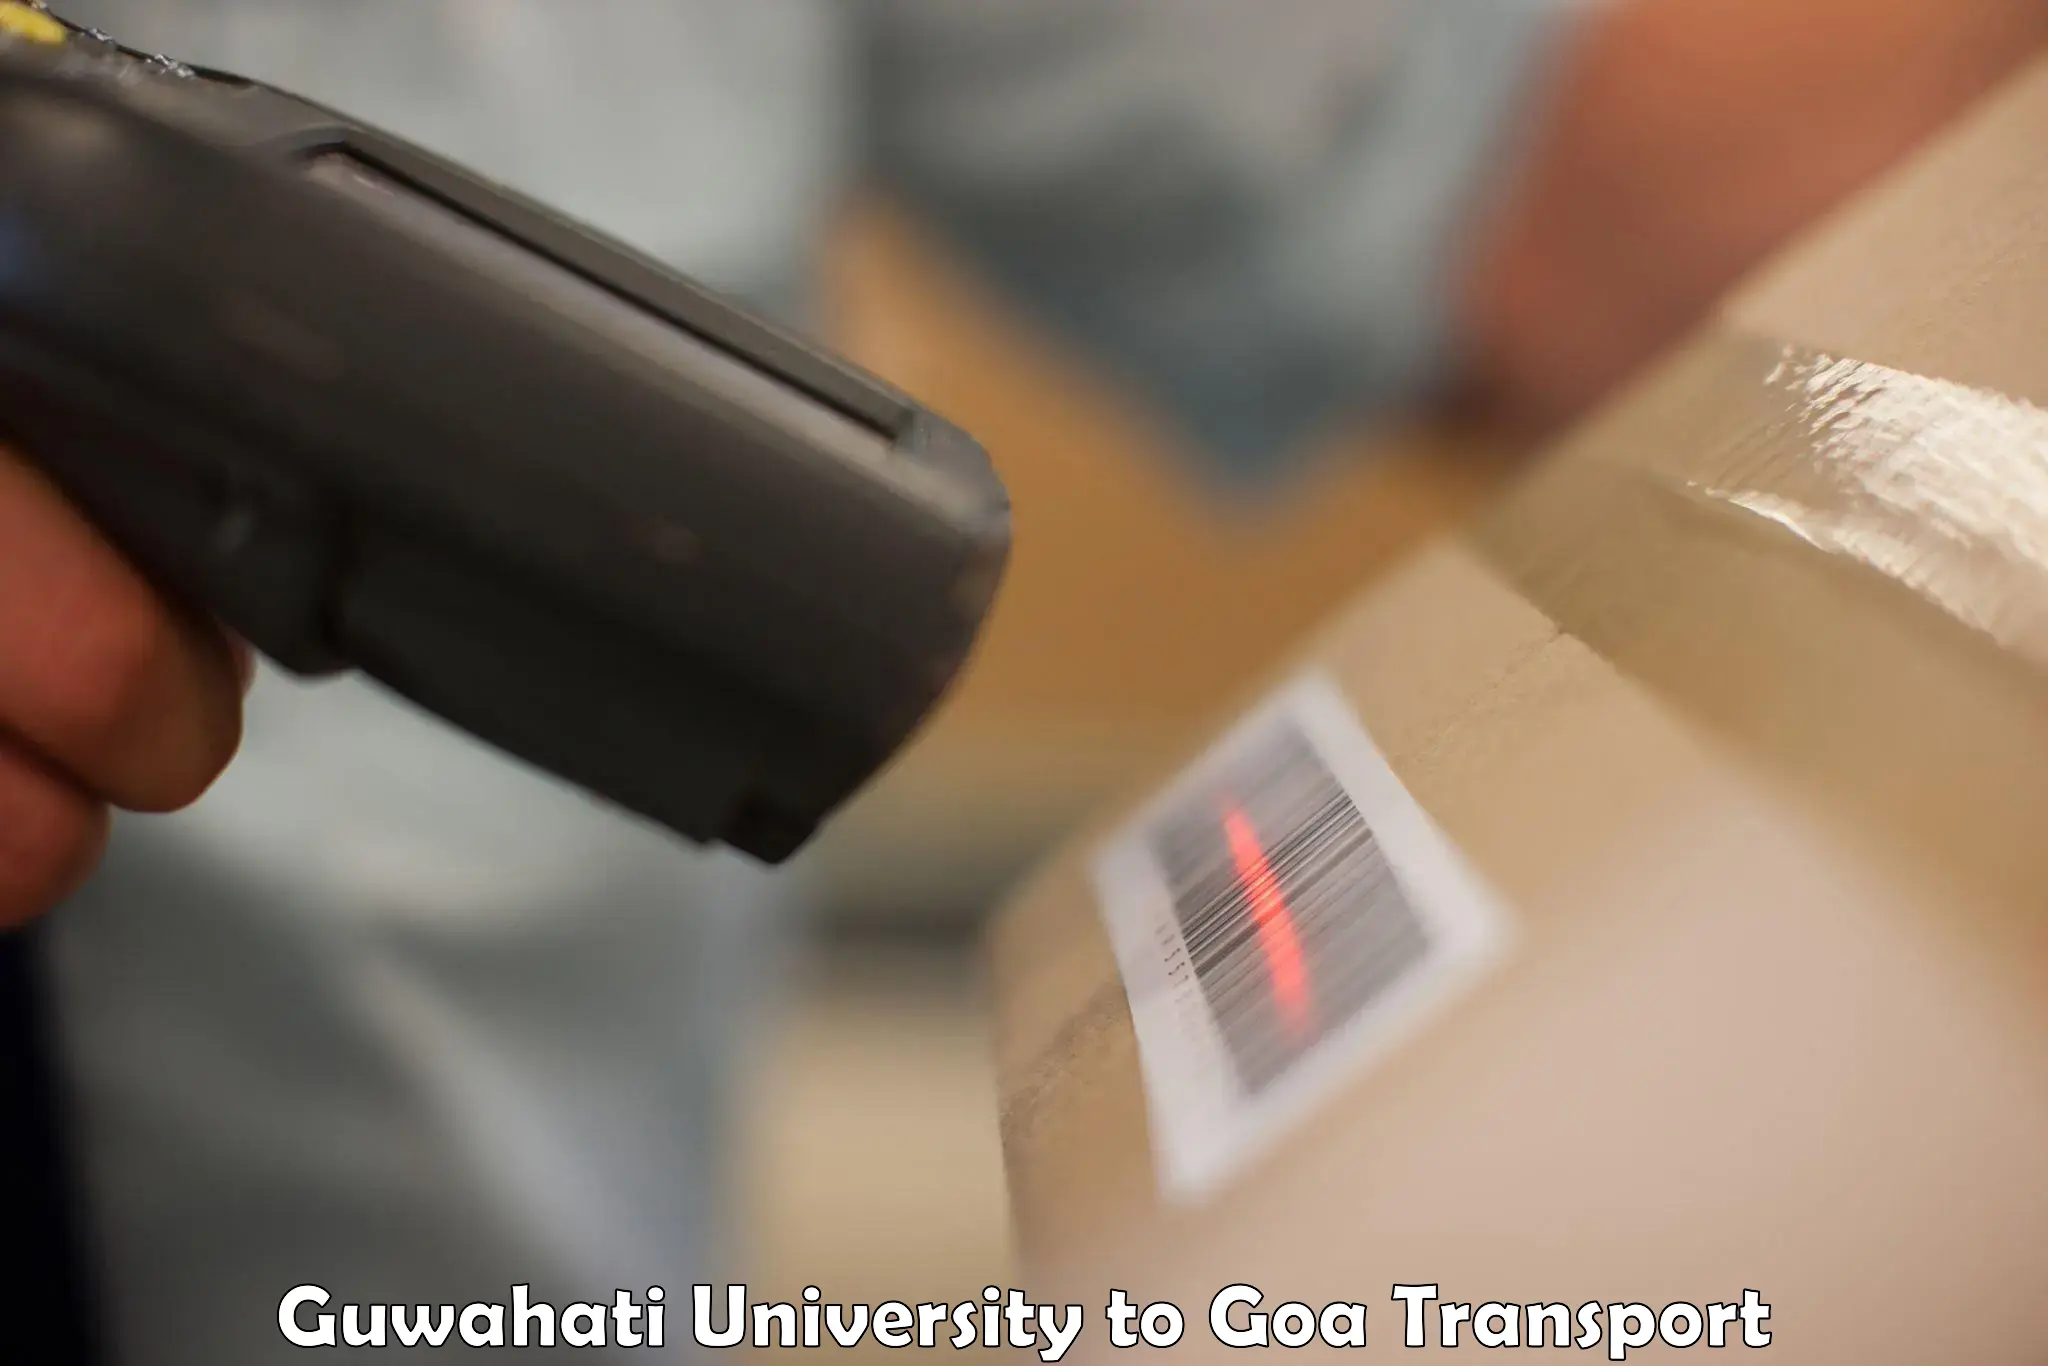 Daily parcel service transport Guwahati University to Goa University